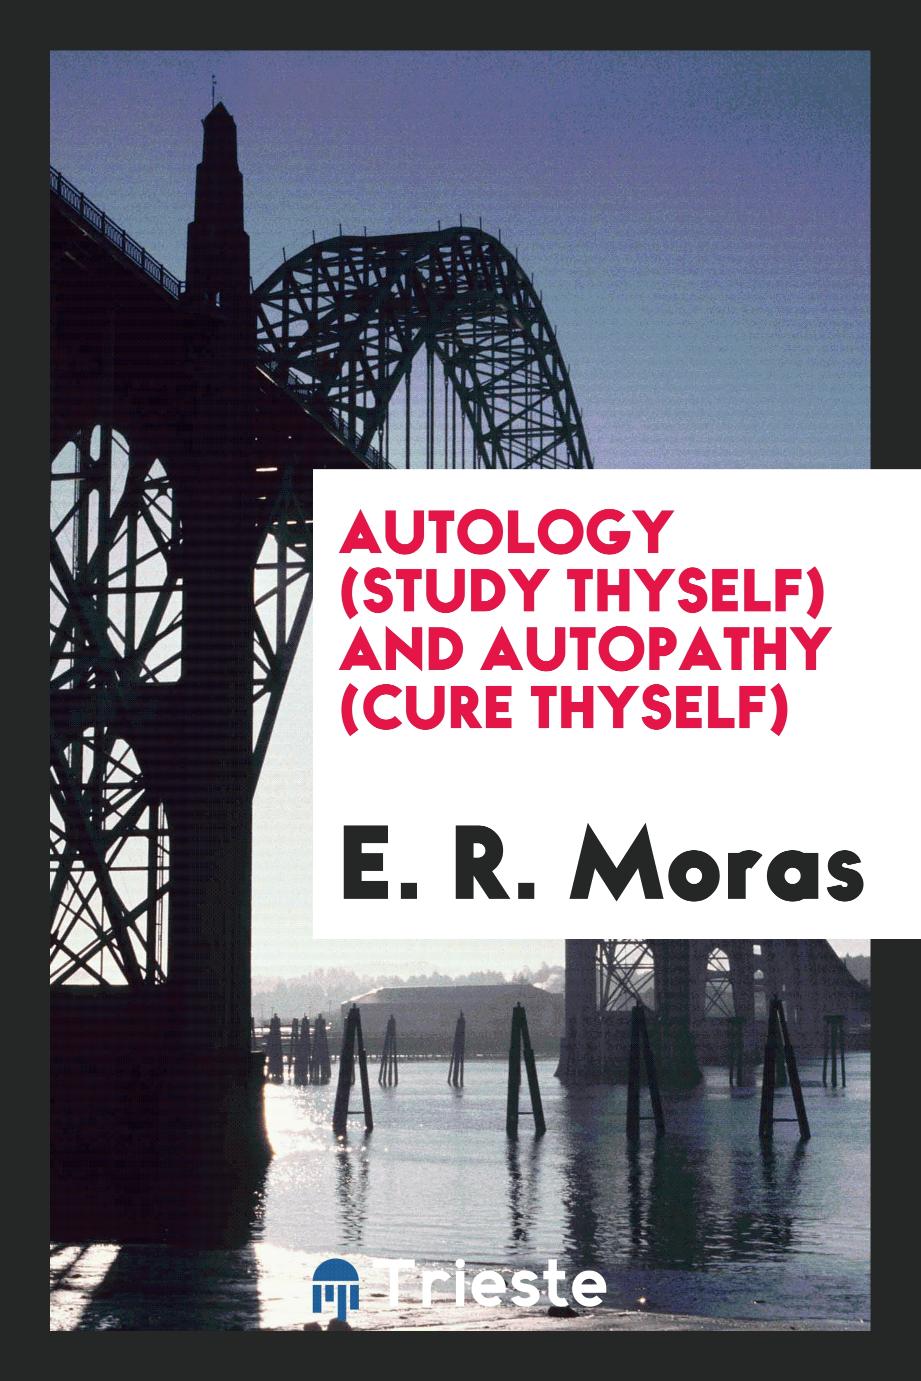 Autology (study thyself) and autopathy (cure thyself)